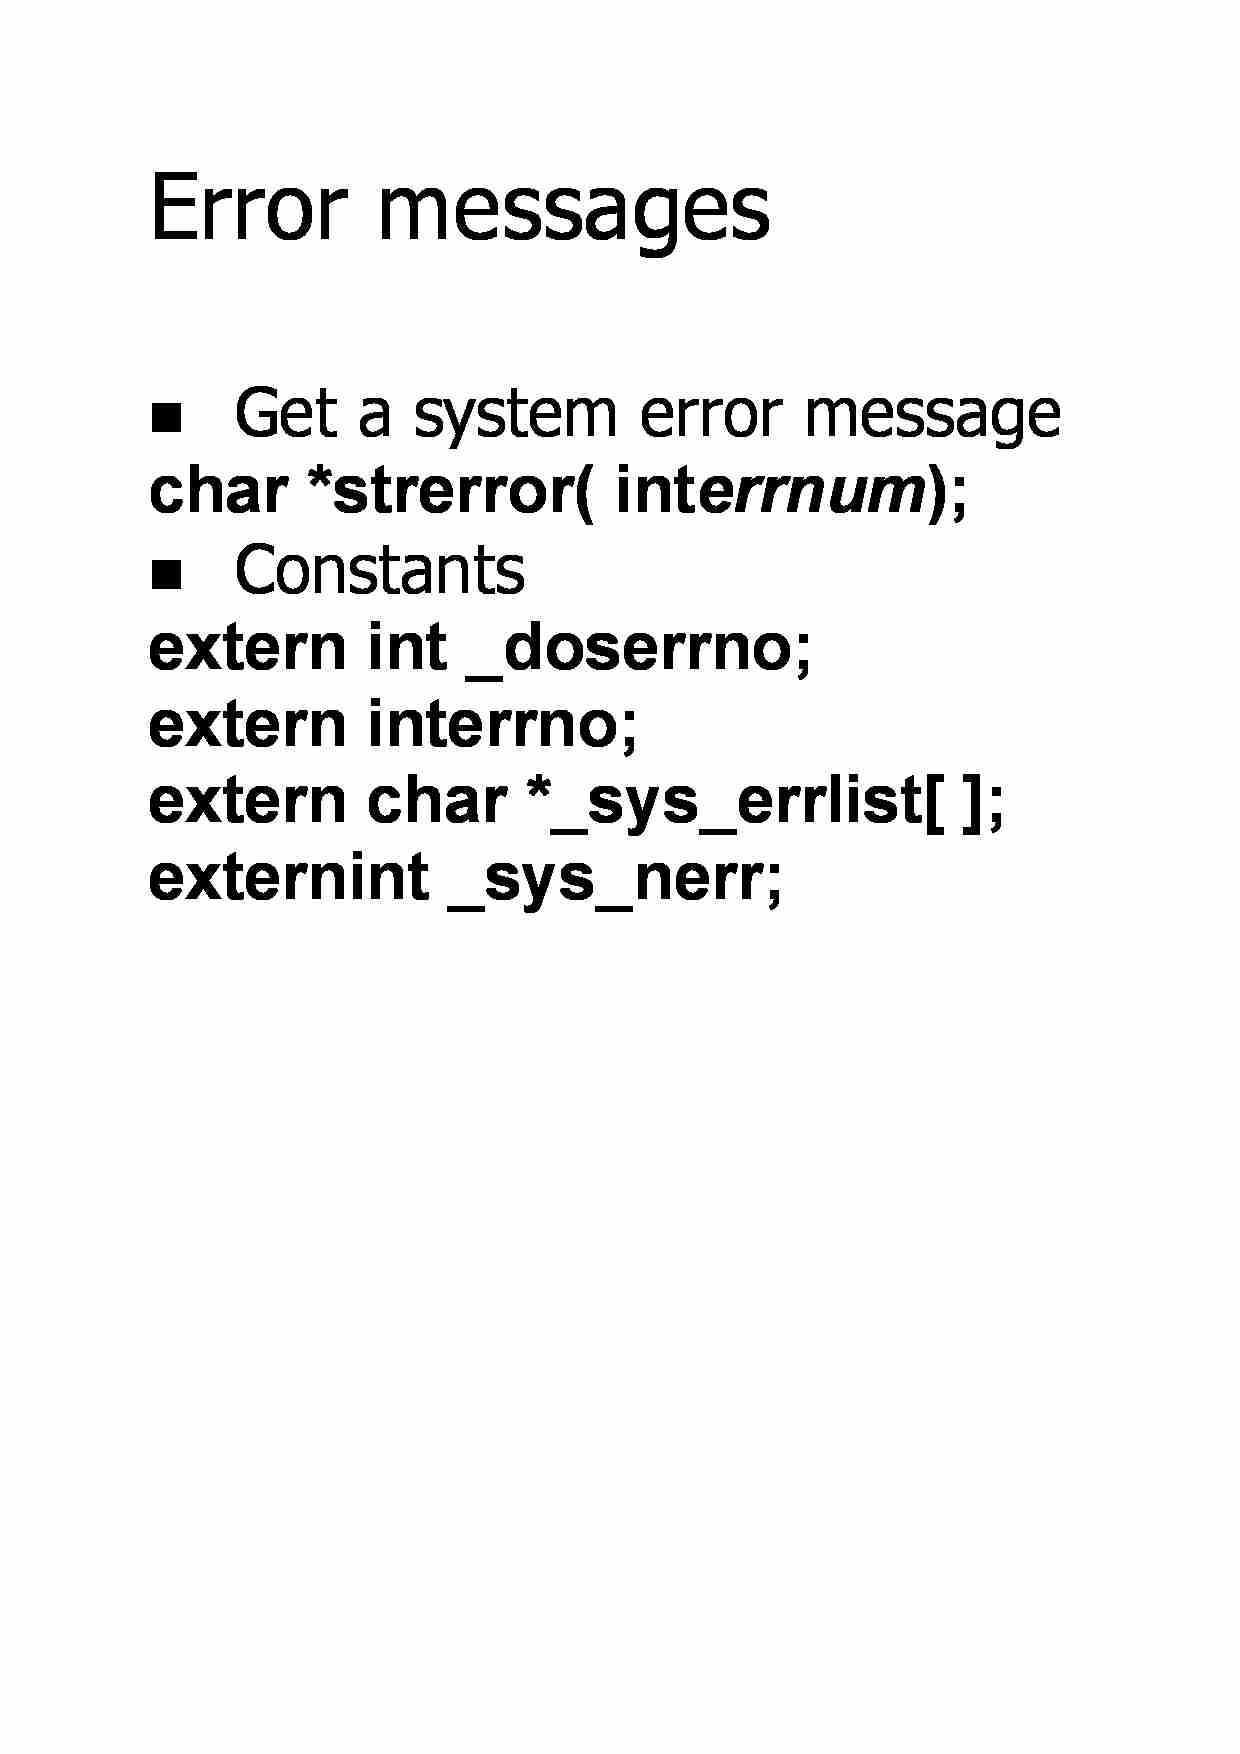 Error messages - strona 1